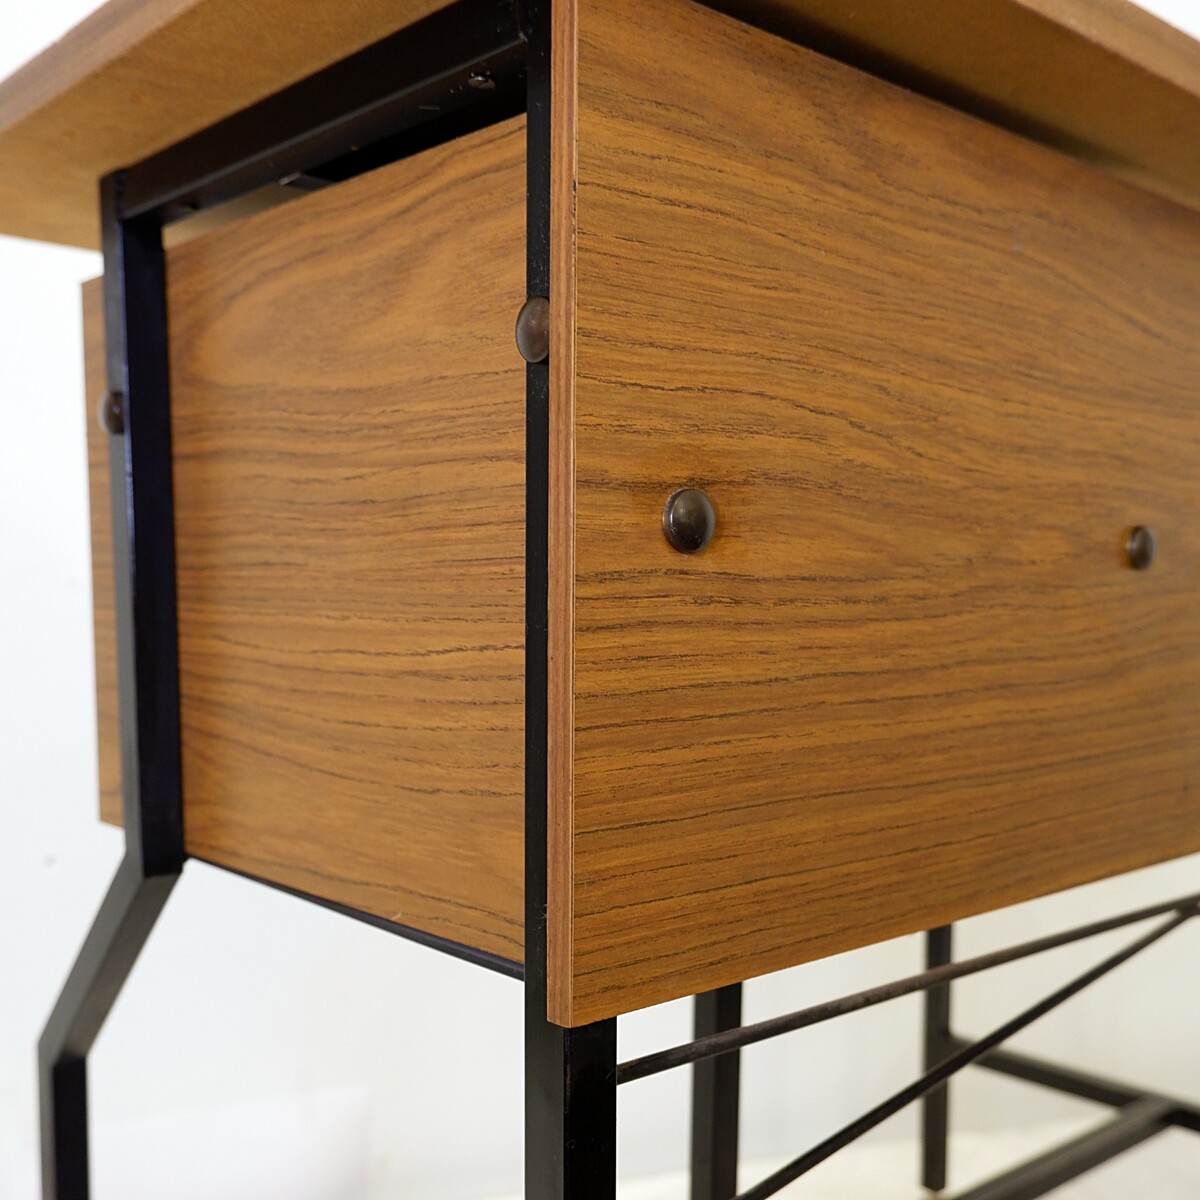 Vintage Metal, wood and formica desk - 1960s